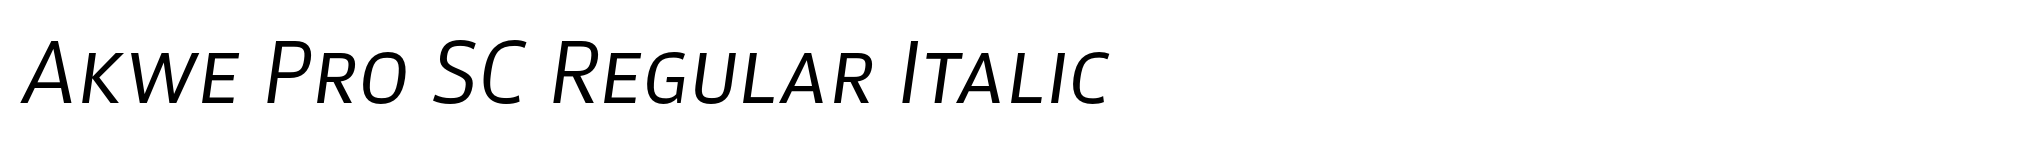 Akwe Pro SC Regular Italic image